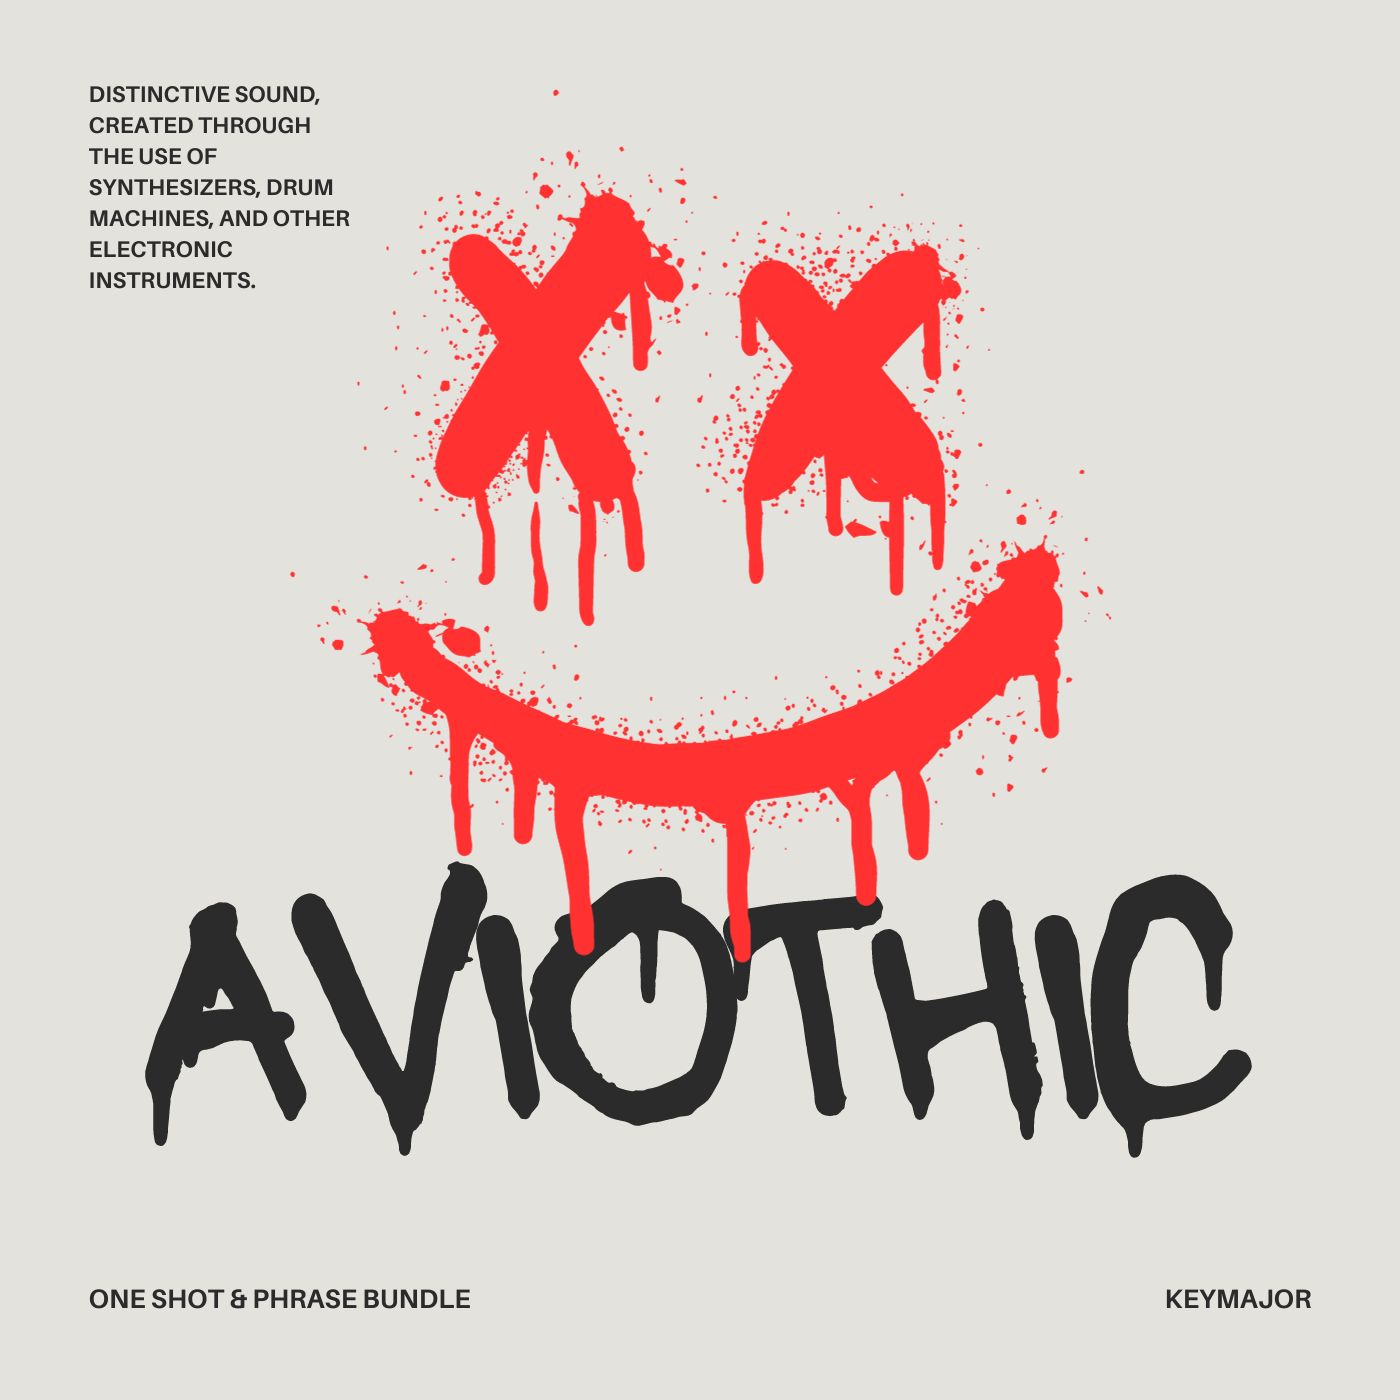 Aviothic Tools: One Shot & Phrase Kit